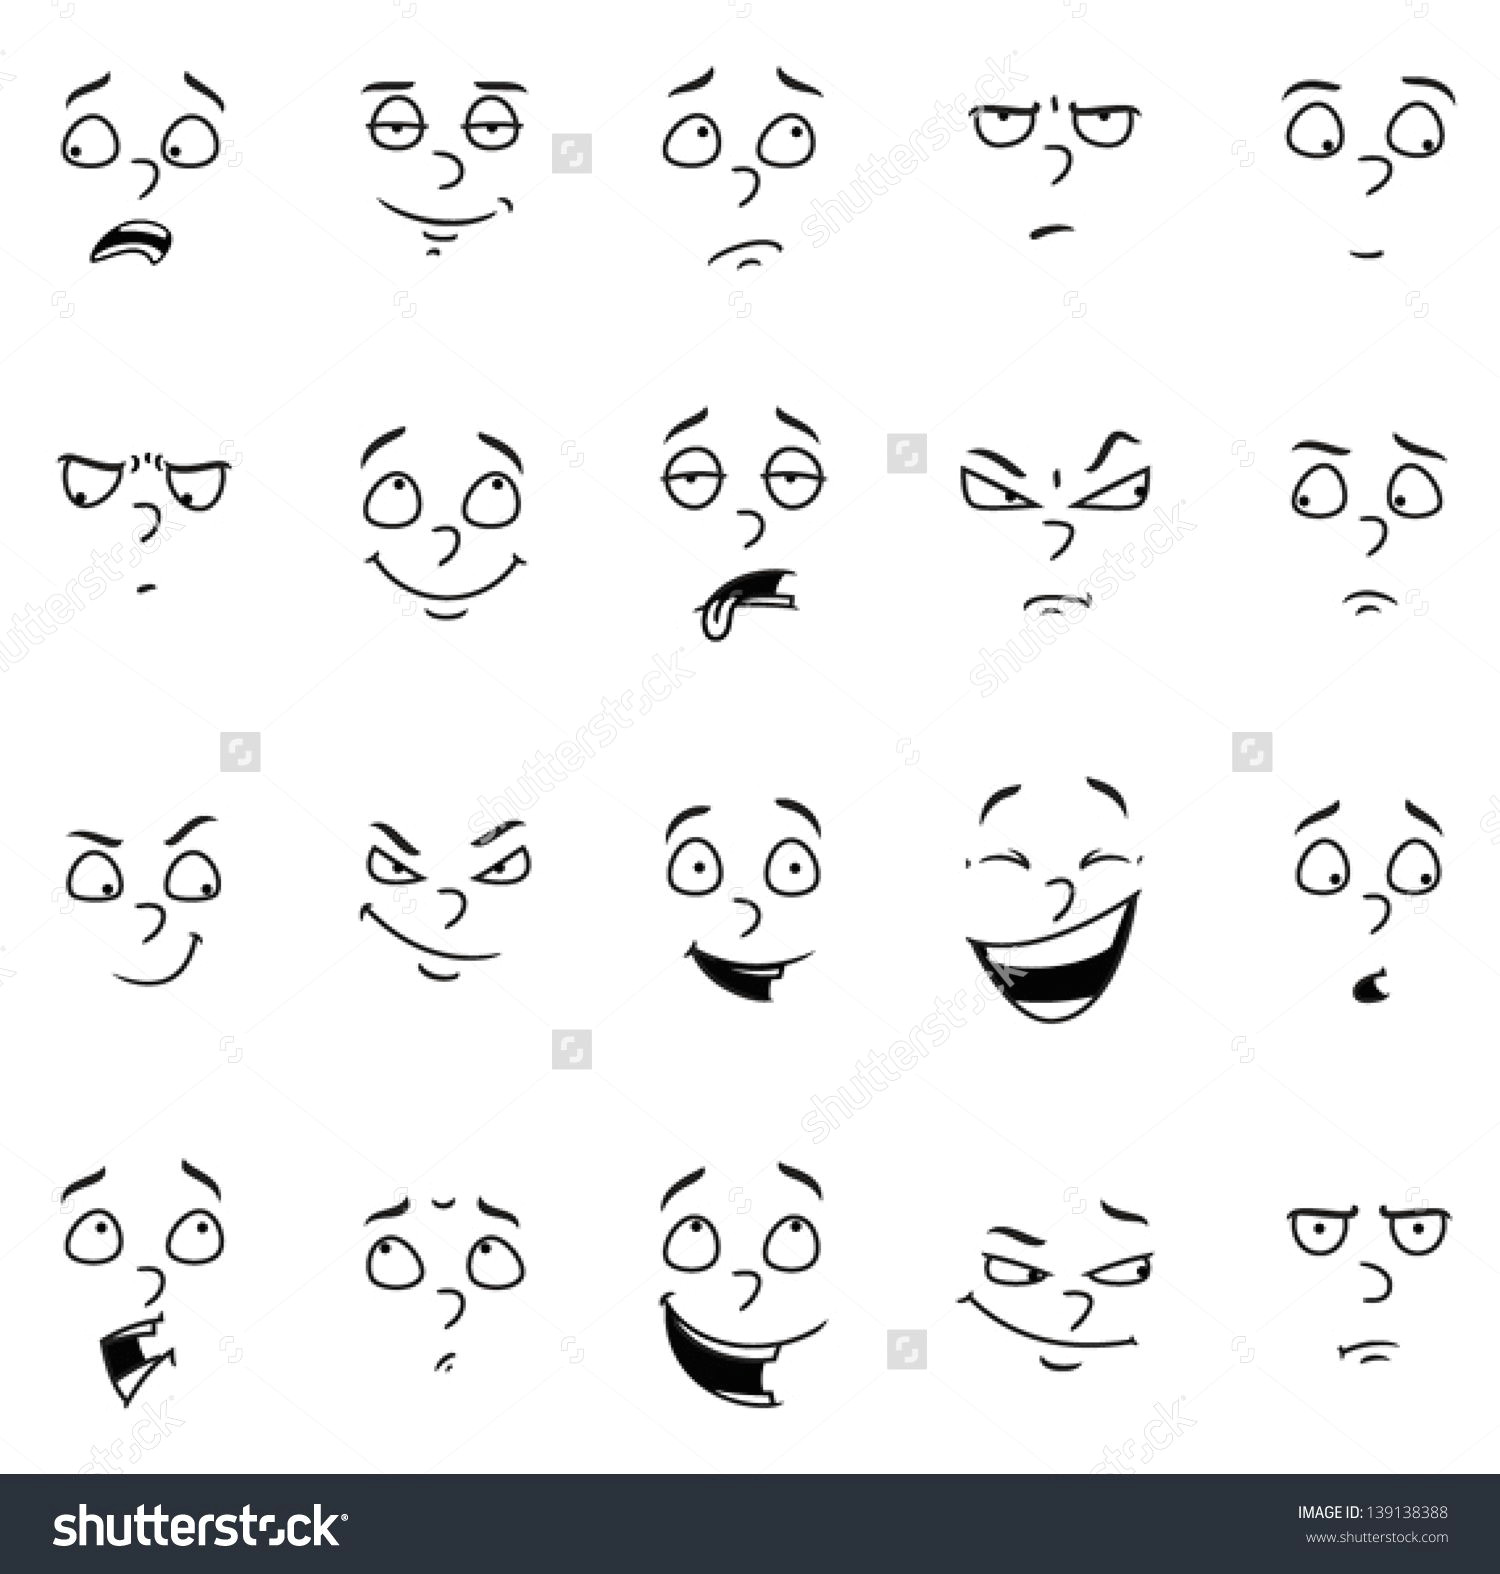 Drawings Of Eyes Cartoon Simple Woman Cartoon Facial Expressions Buscar Con Google Art